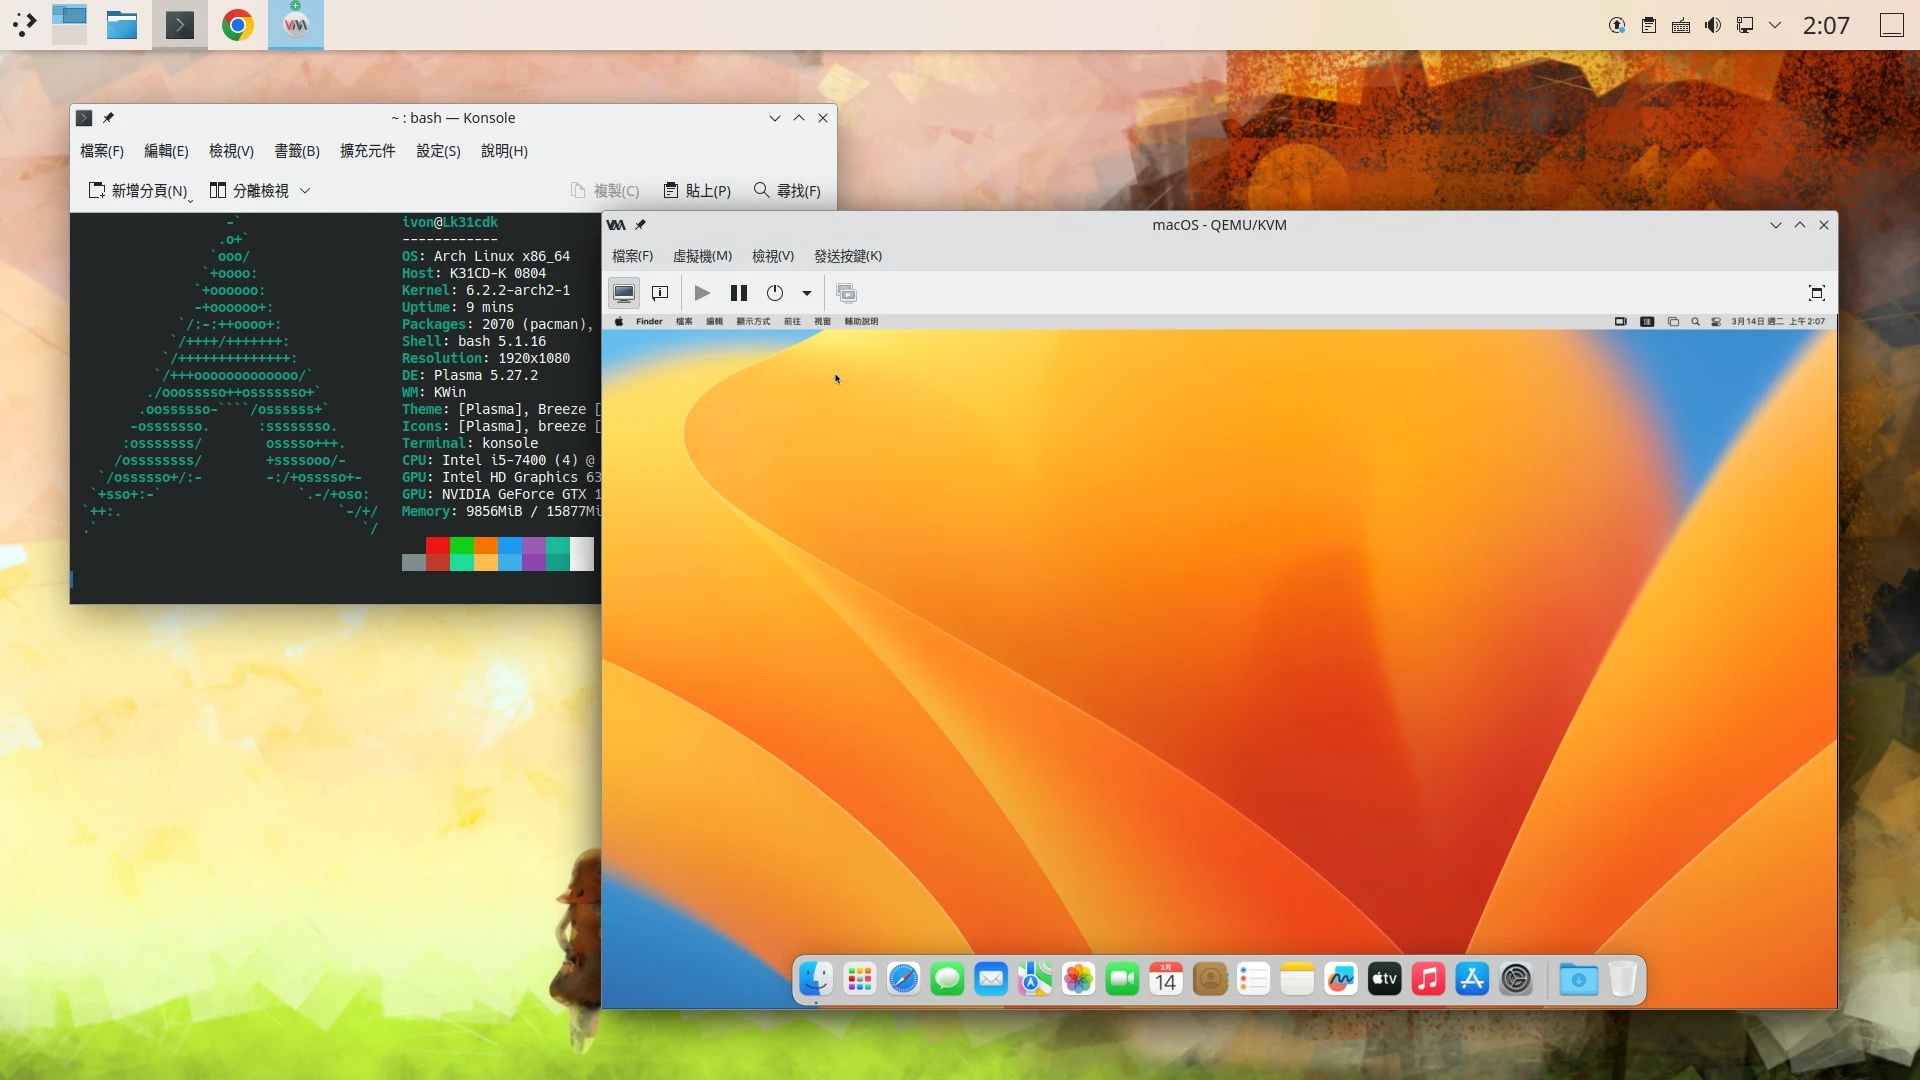 macOS Ventura virtual machine running on Arch Linux